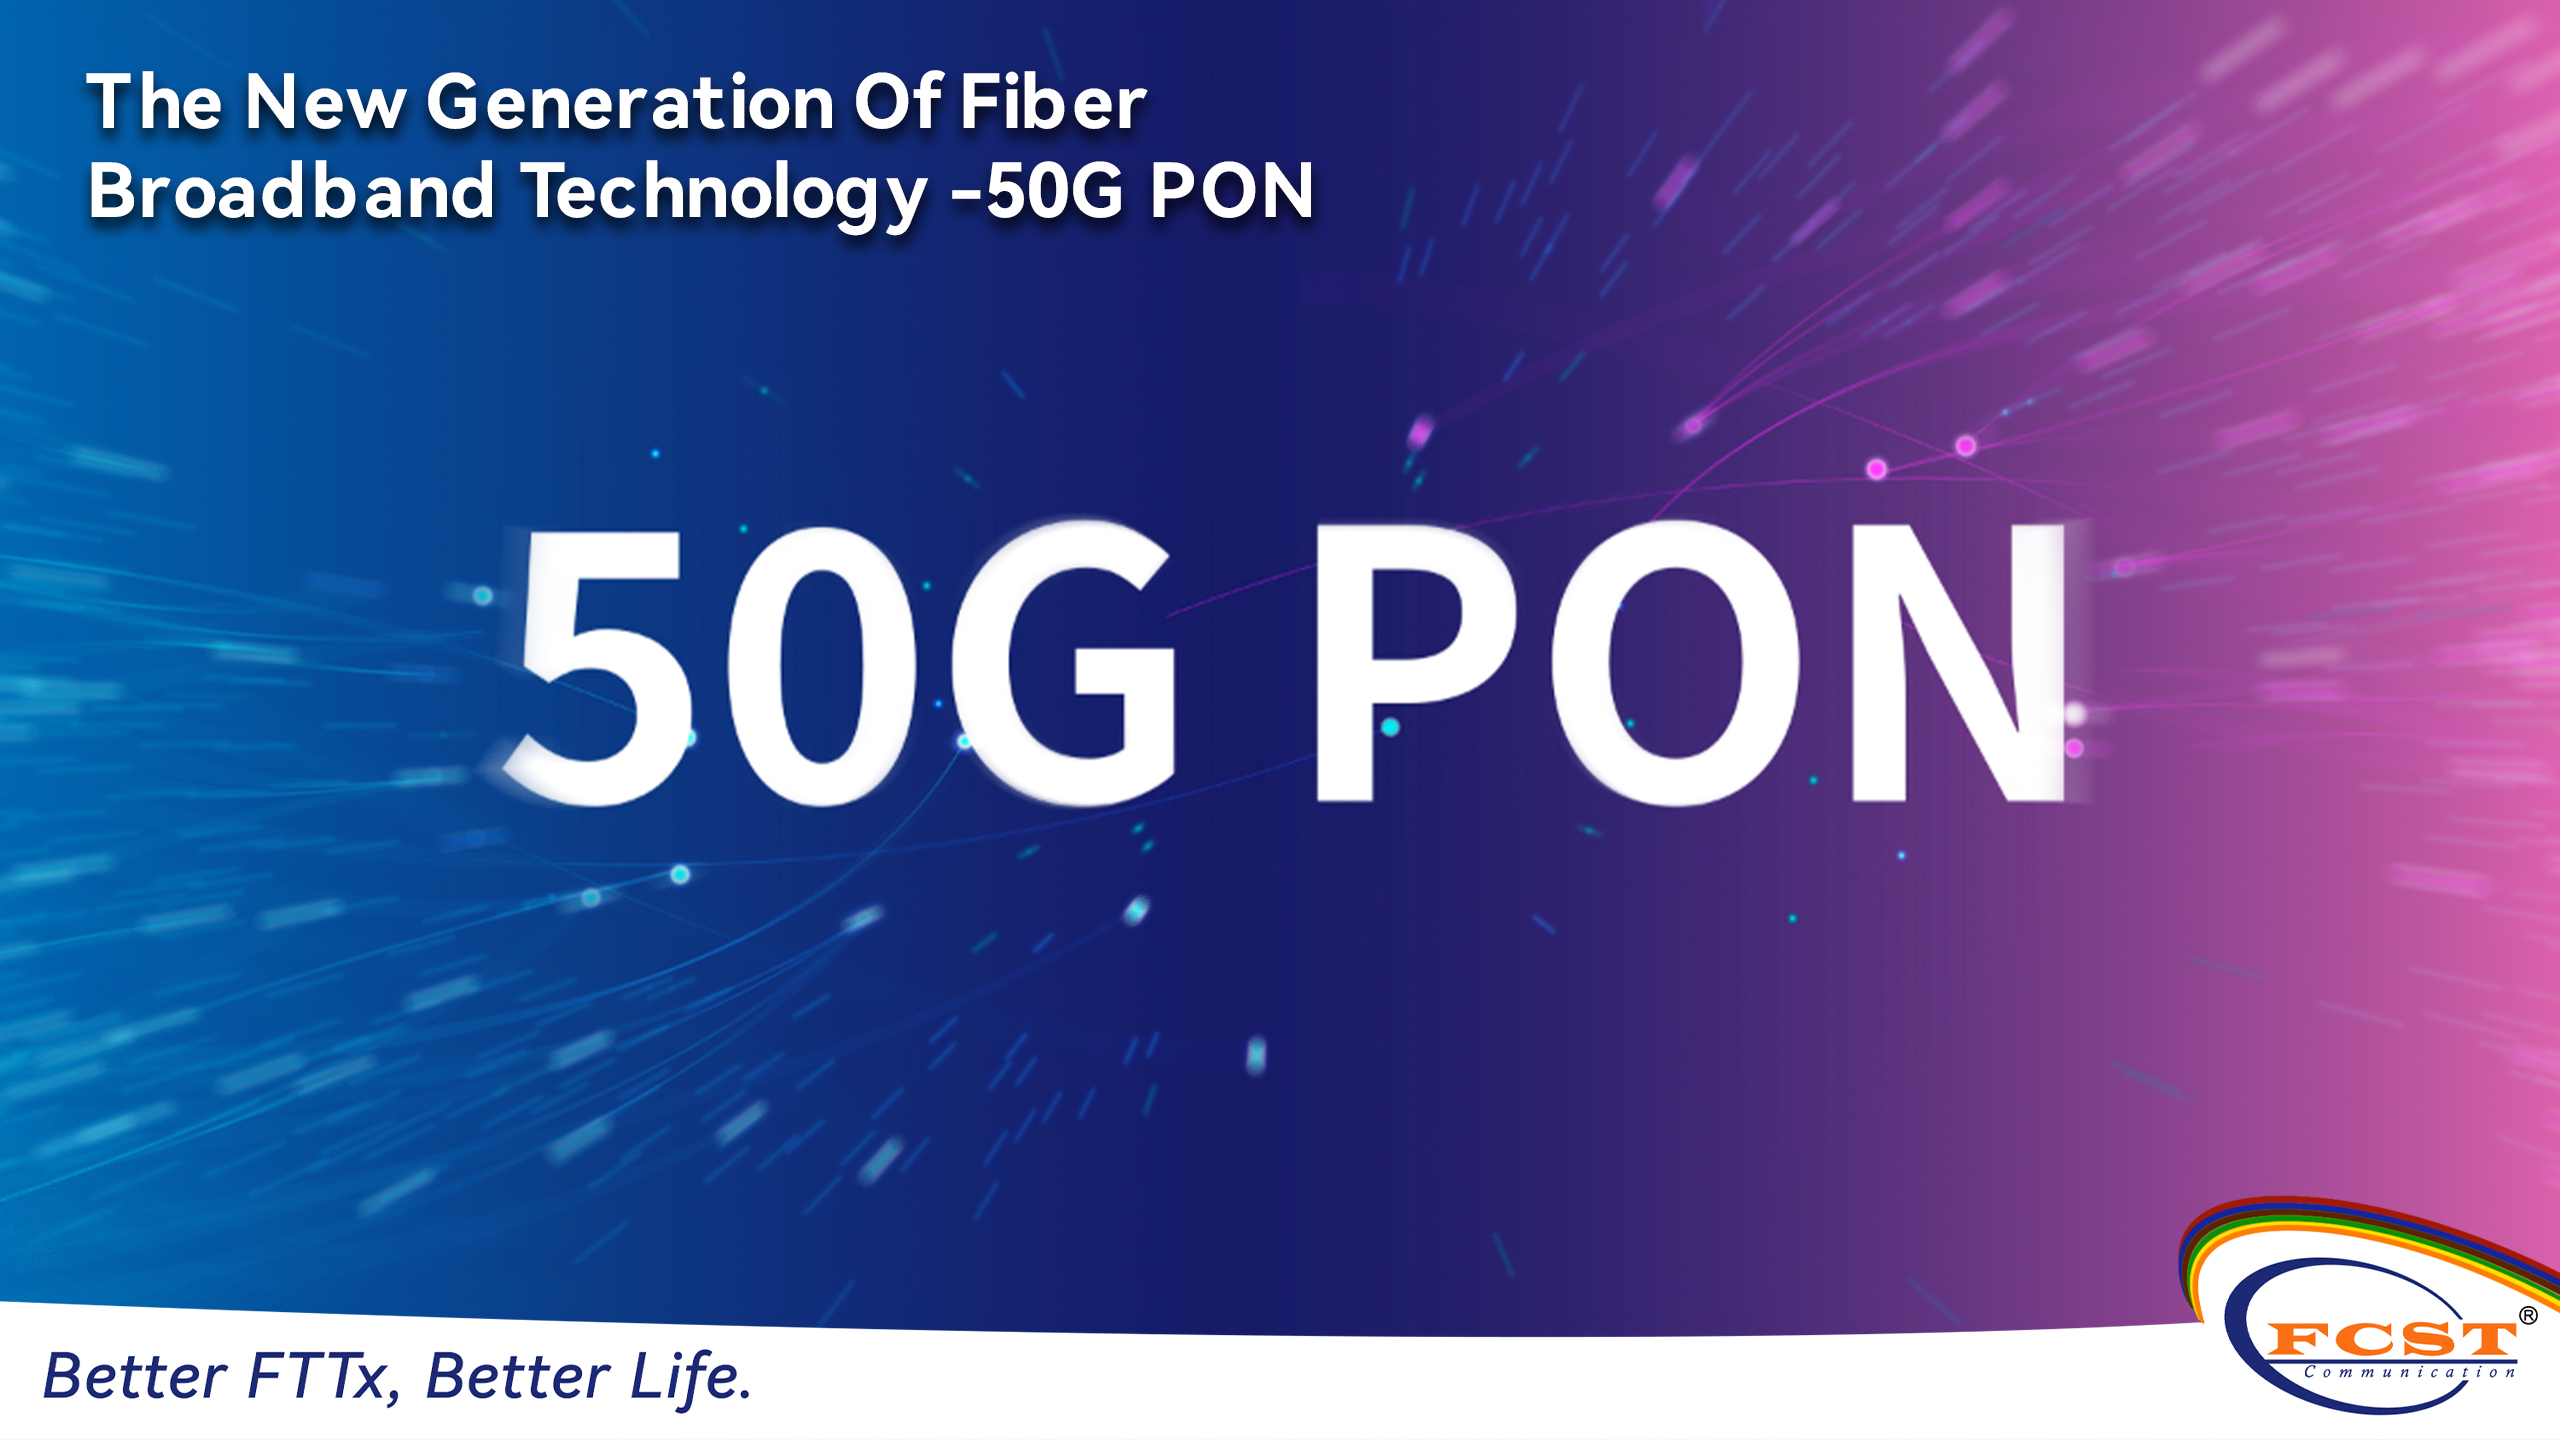 The New Generation Of Fiber Broadband Technology -50G PON